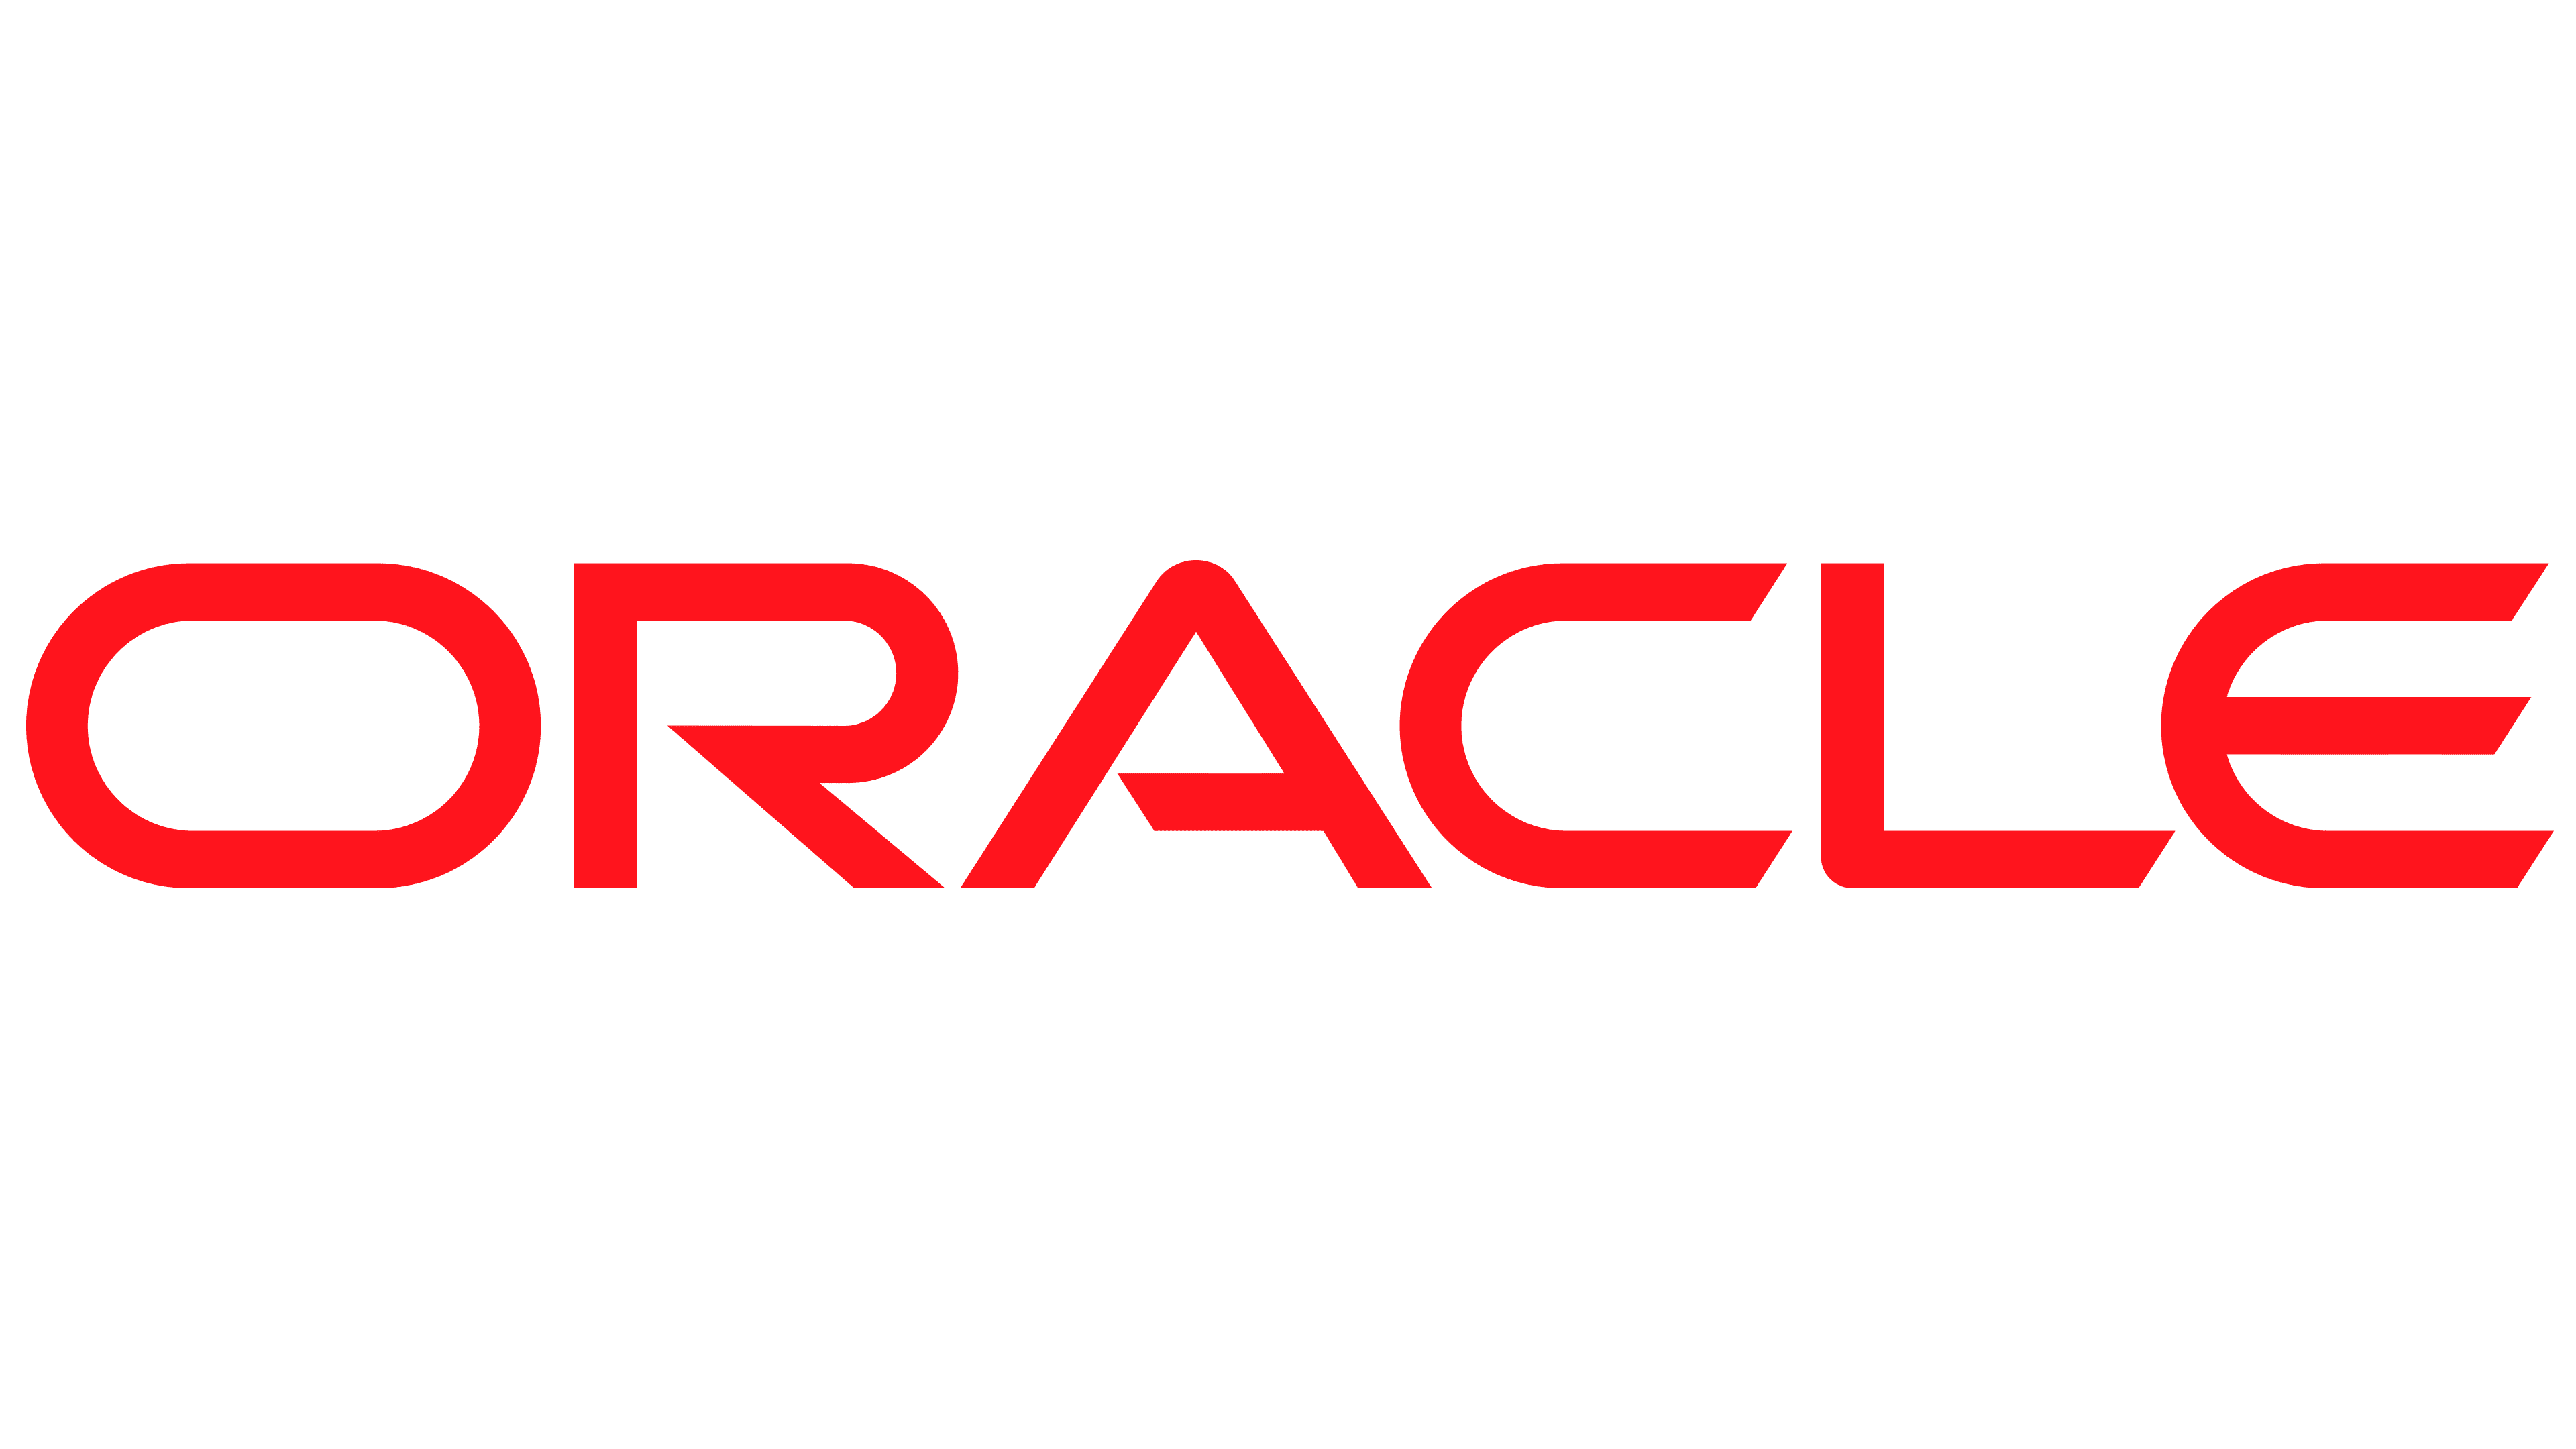 Oracle Logo PNG